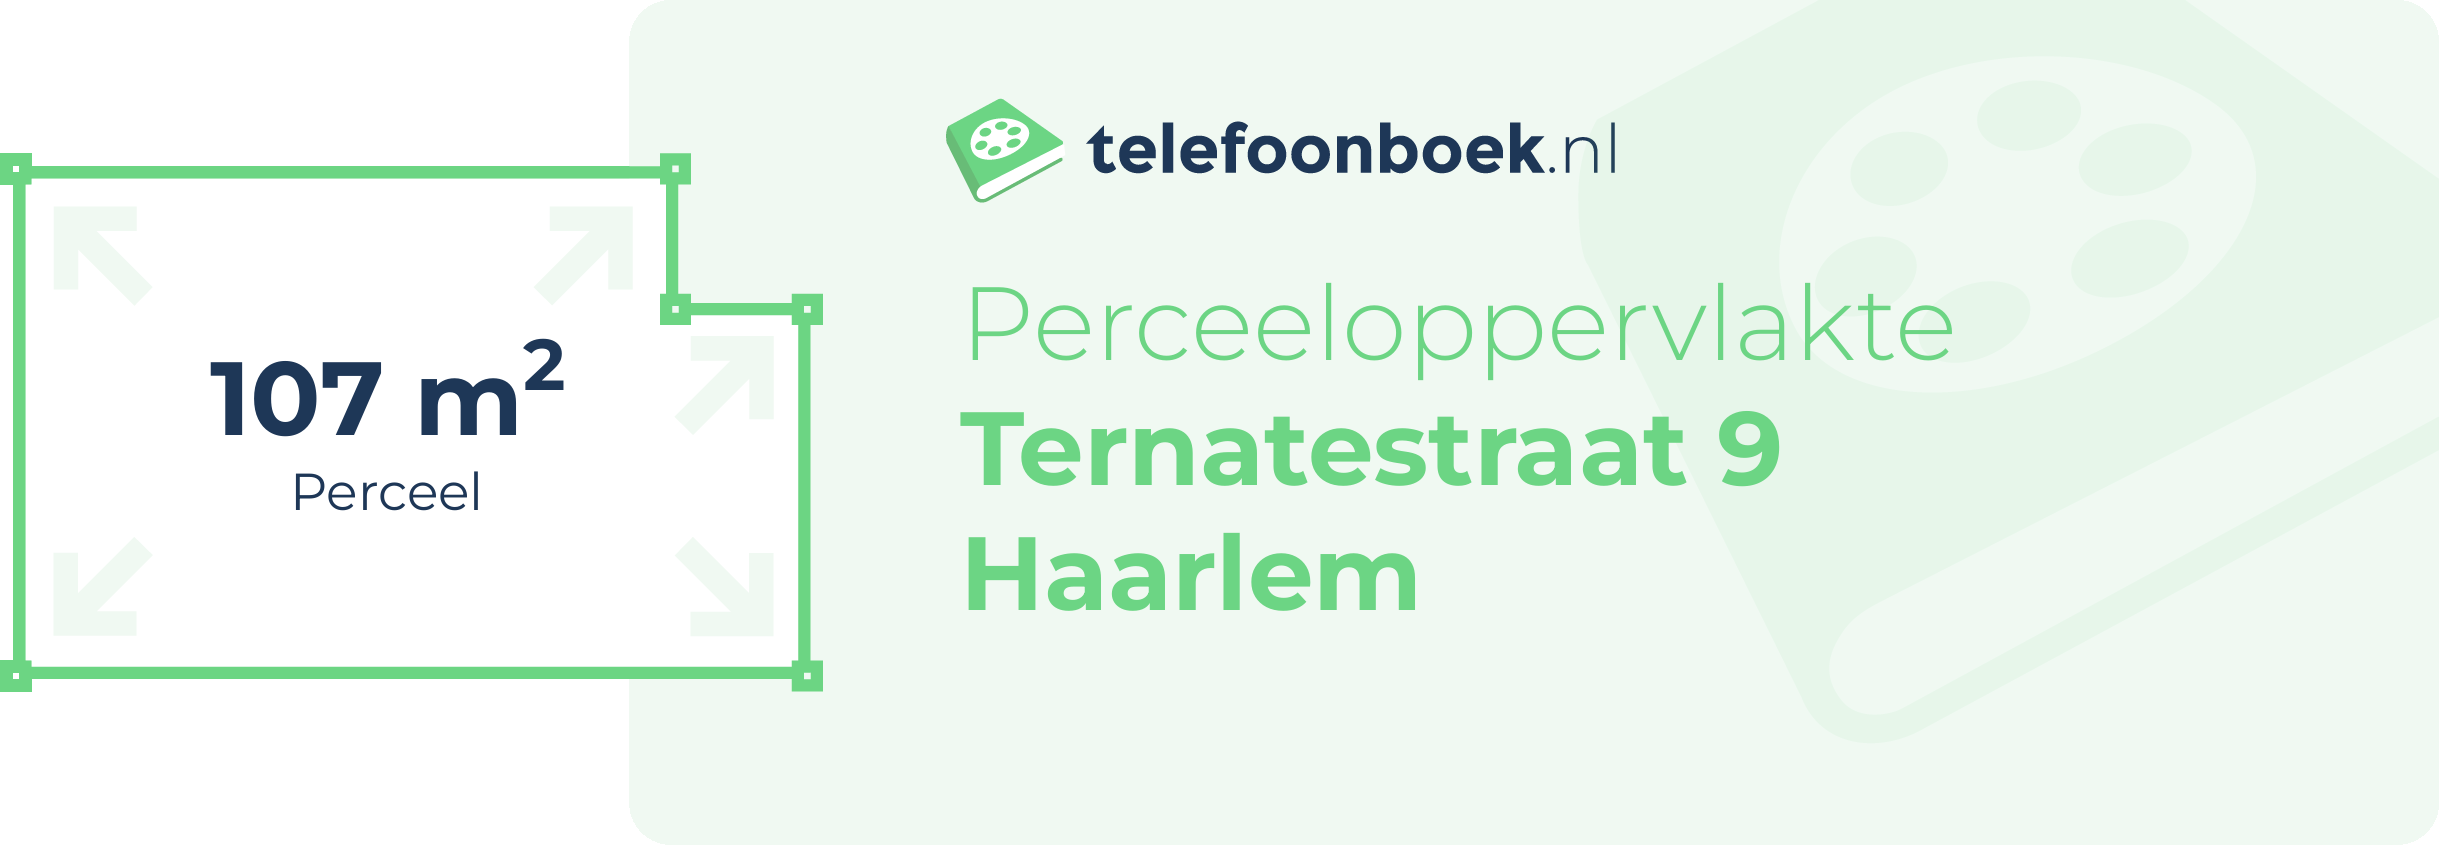 Perceeloppervlakte Ternatestraat 9 Haarlem